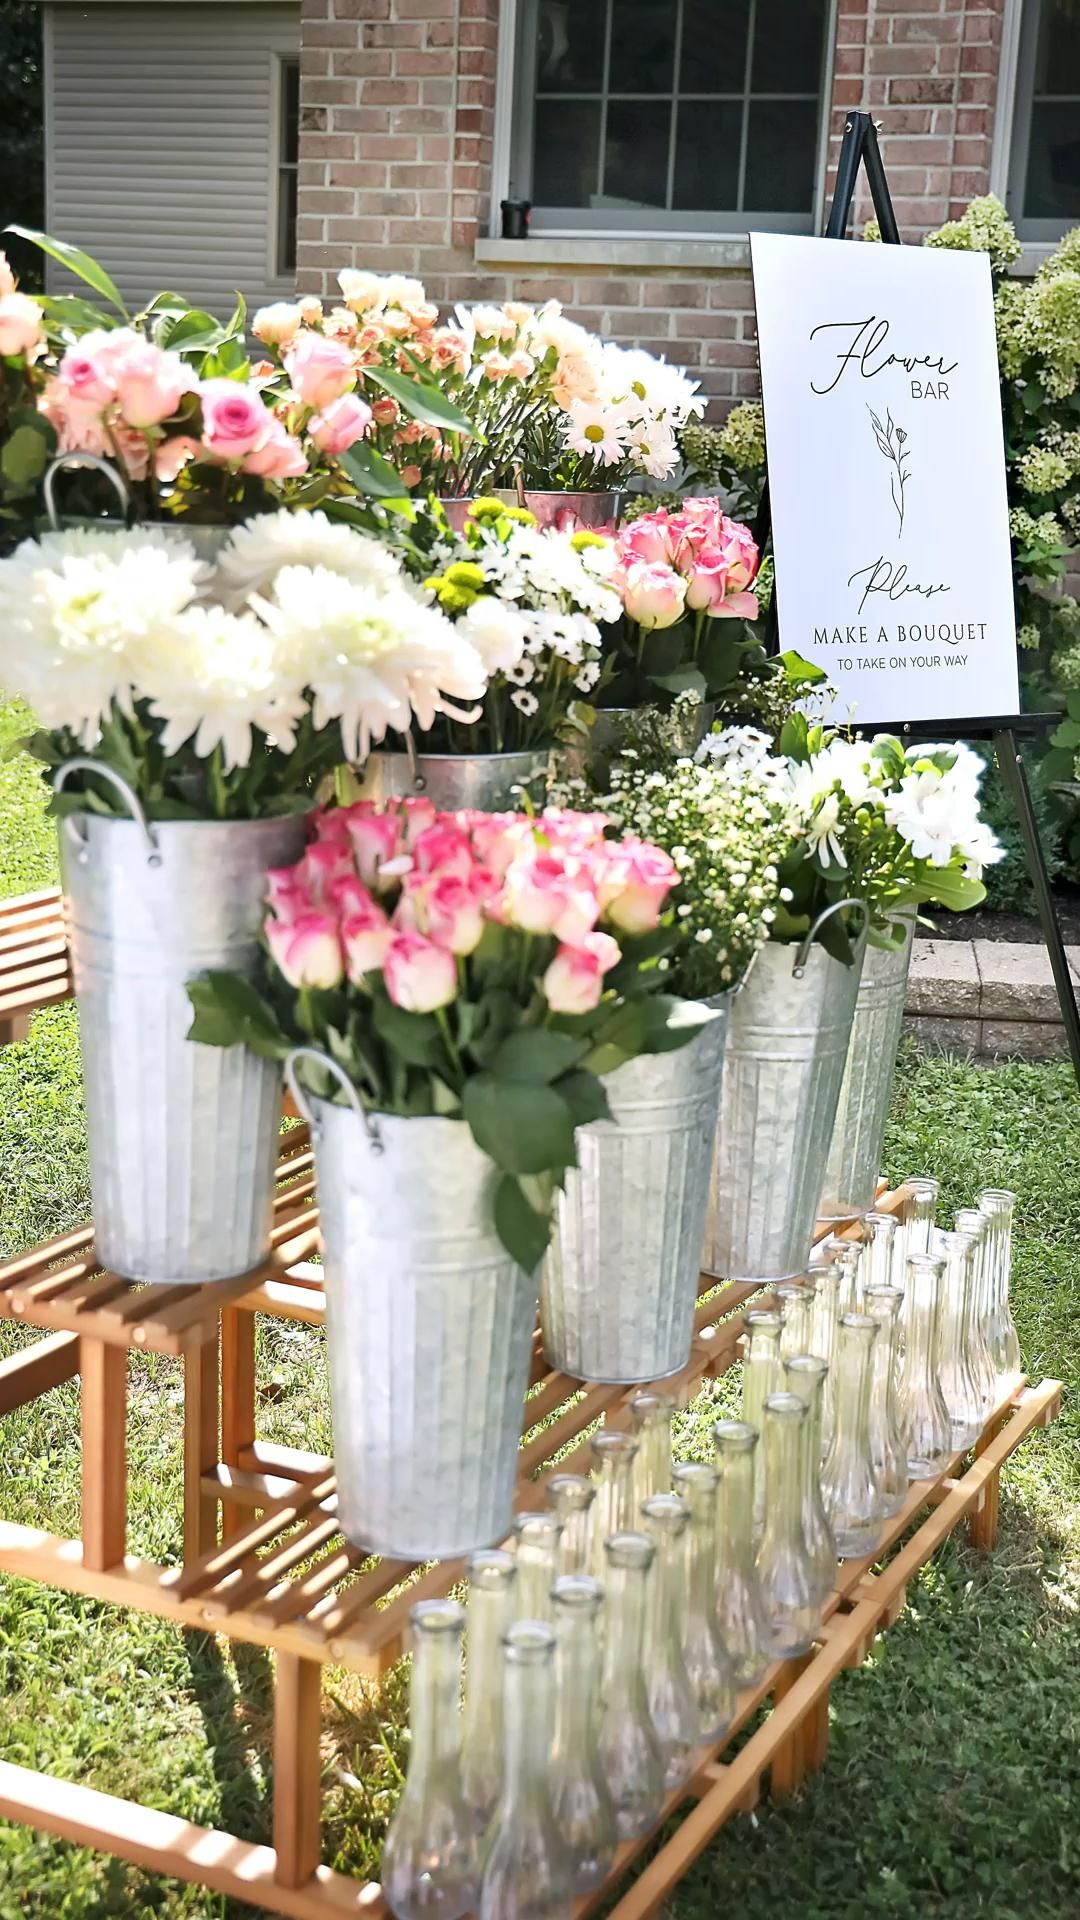 Bridal Shower Flower Bar wedding gift ideas